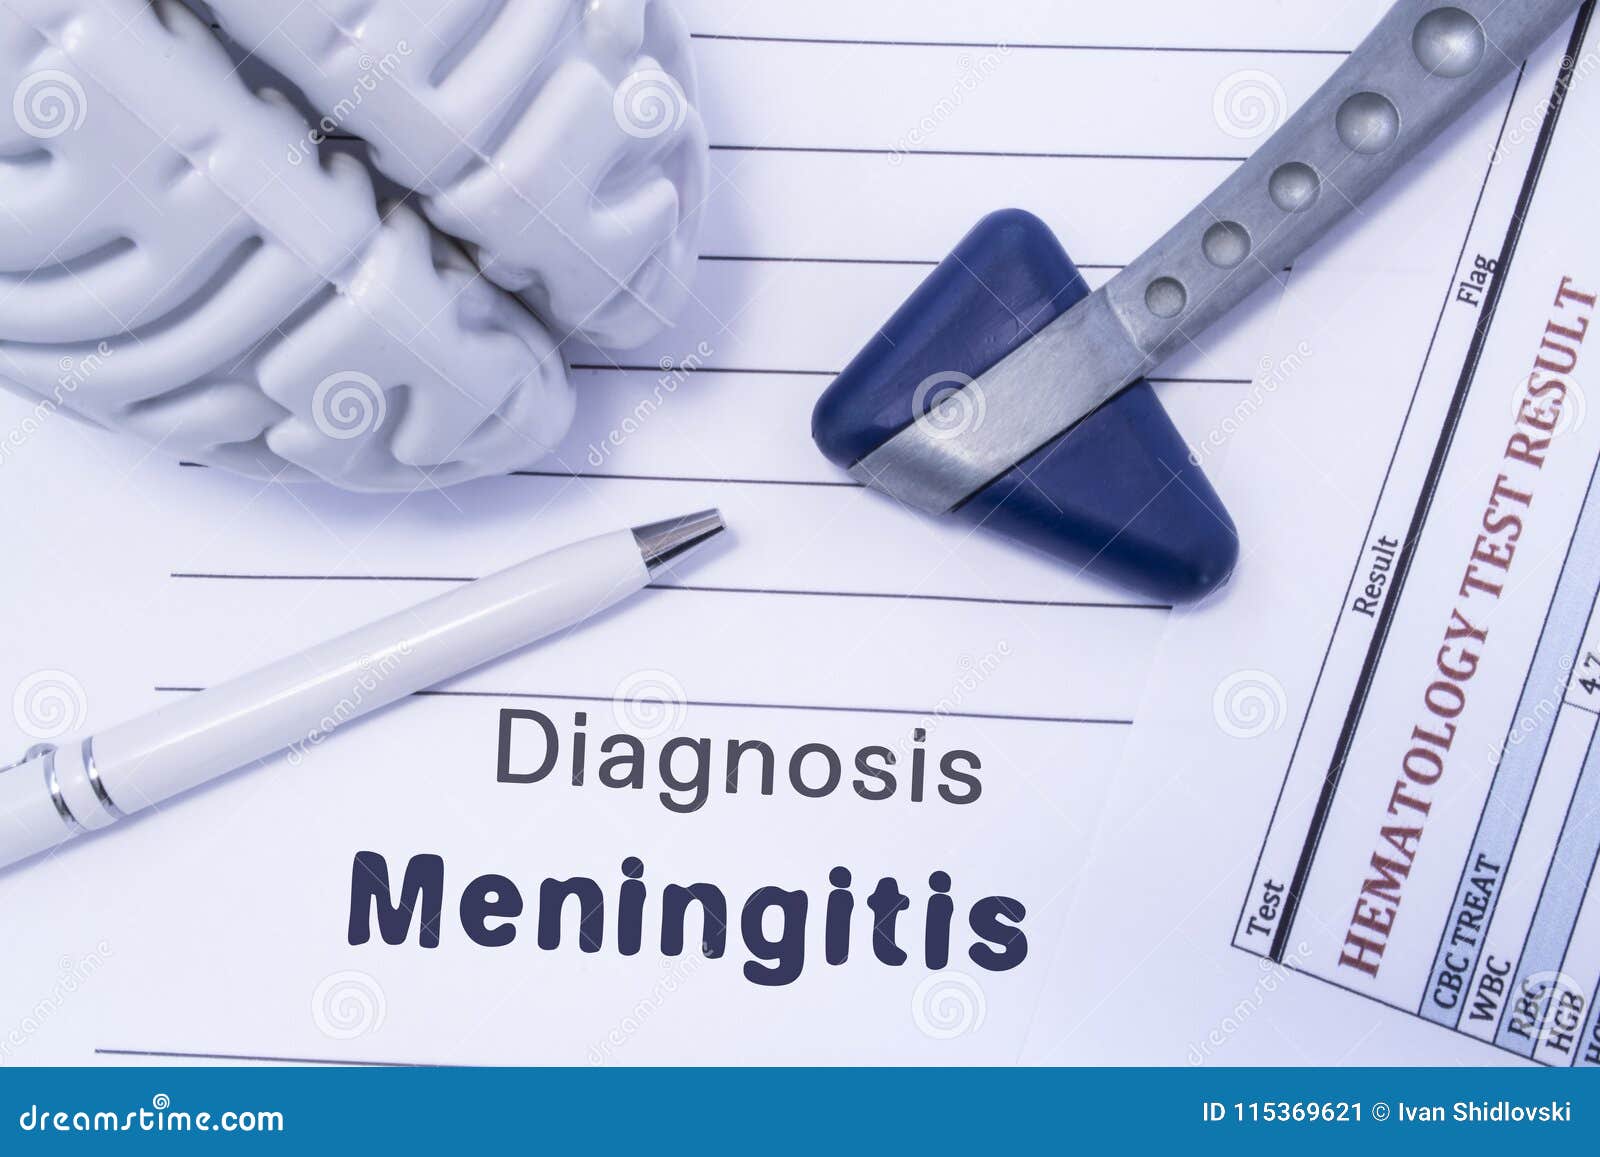 diagnosis meningitis. figure brain, neurological hammer, printed on a paper blood test and written diagnosis of meningitis in the